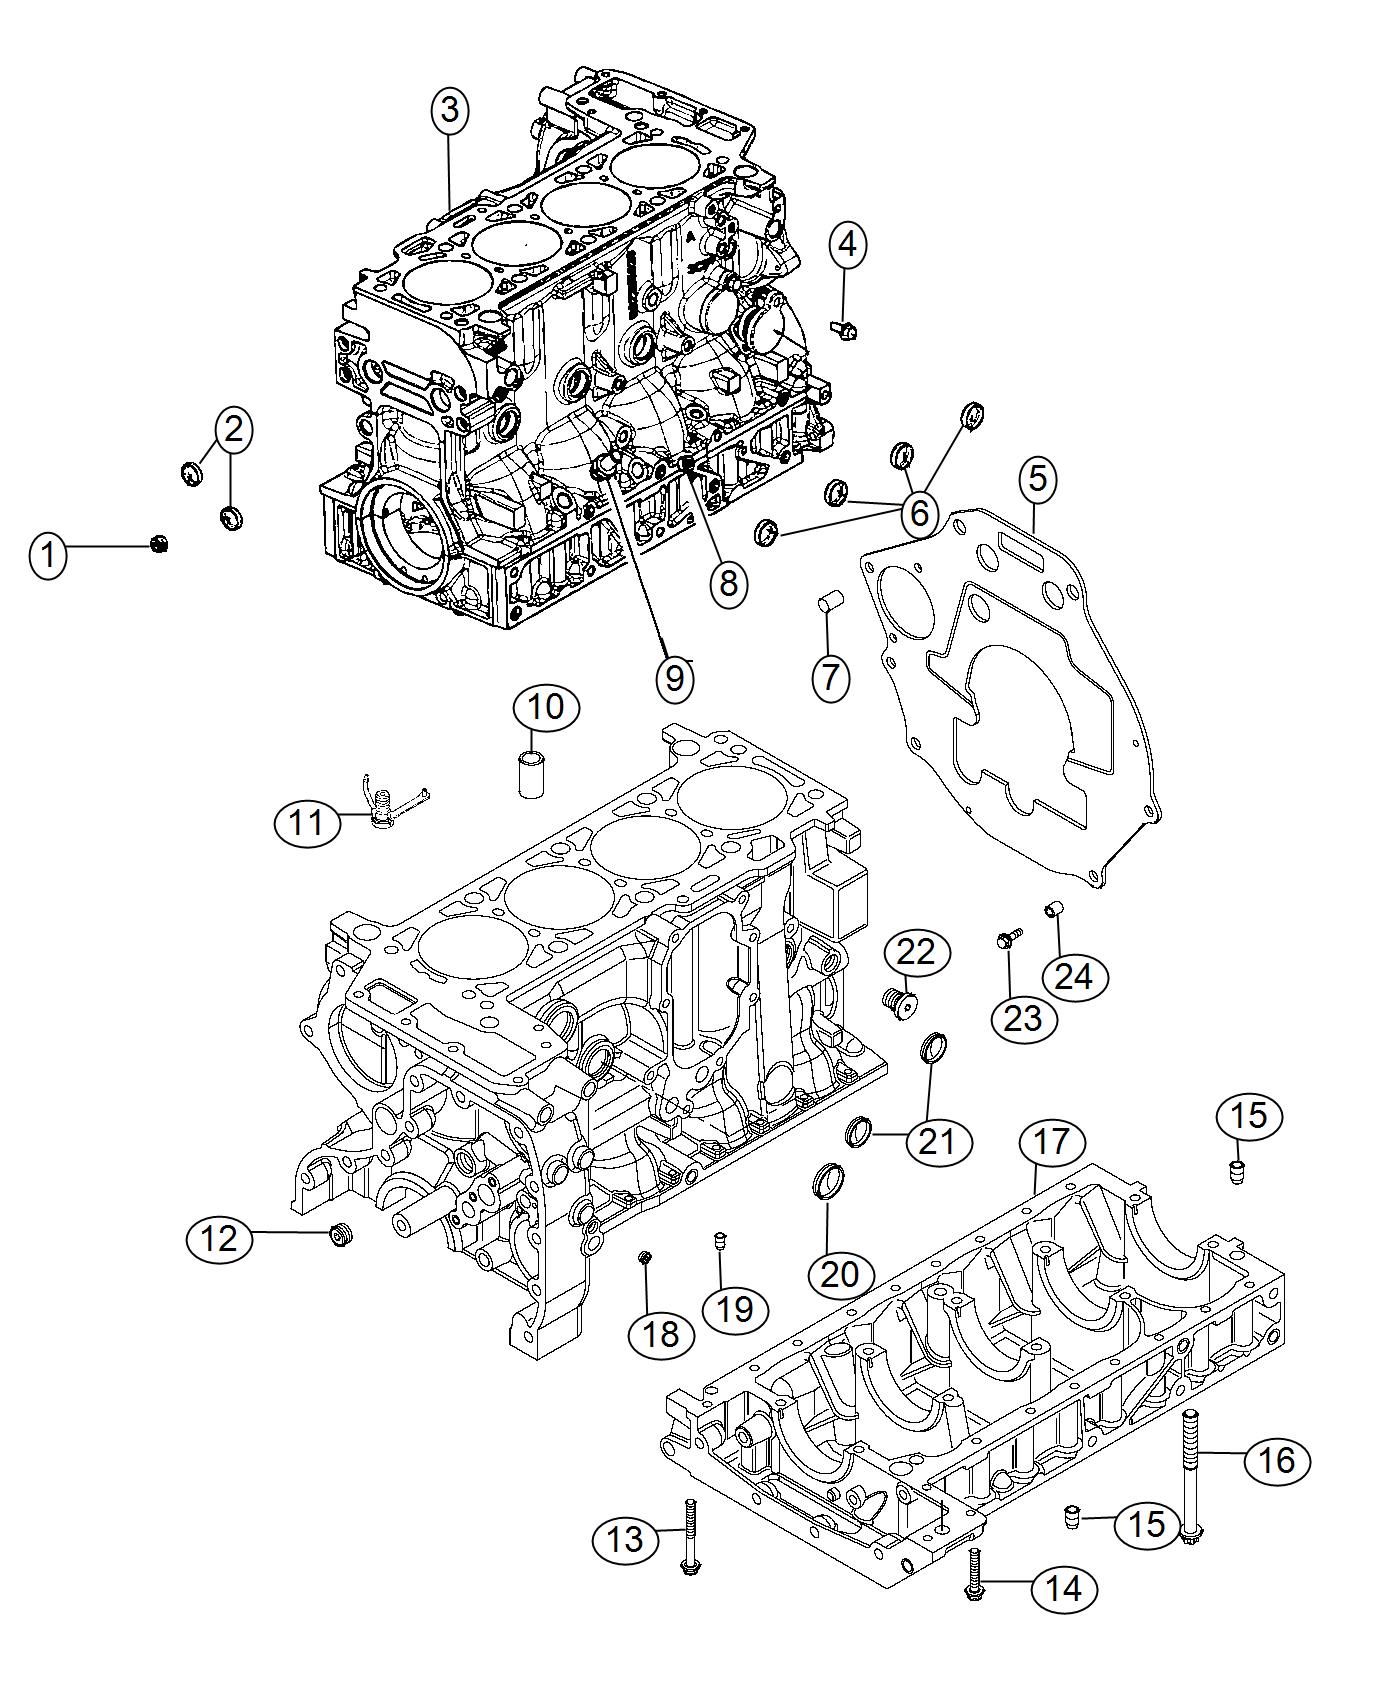 Diagram Cylinder Block And Hardware 3.0L Diesel [3.0L I4 Turbo Diesel Engine]. for your Ram